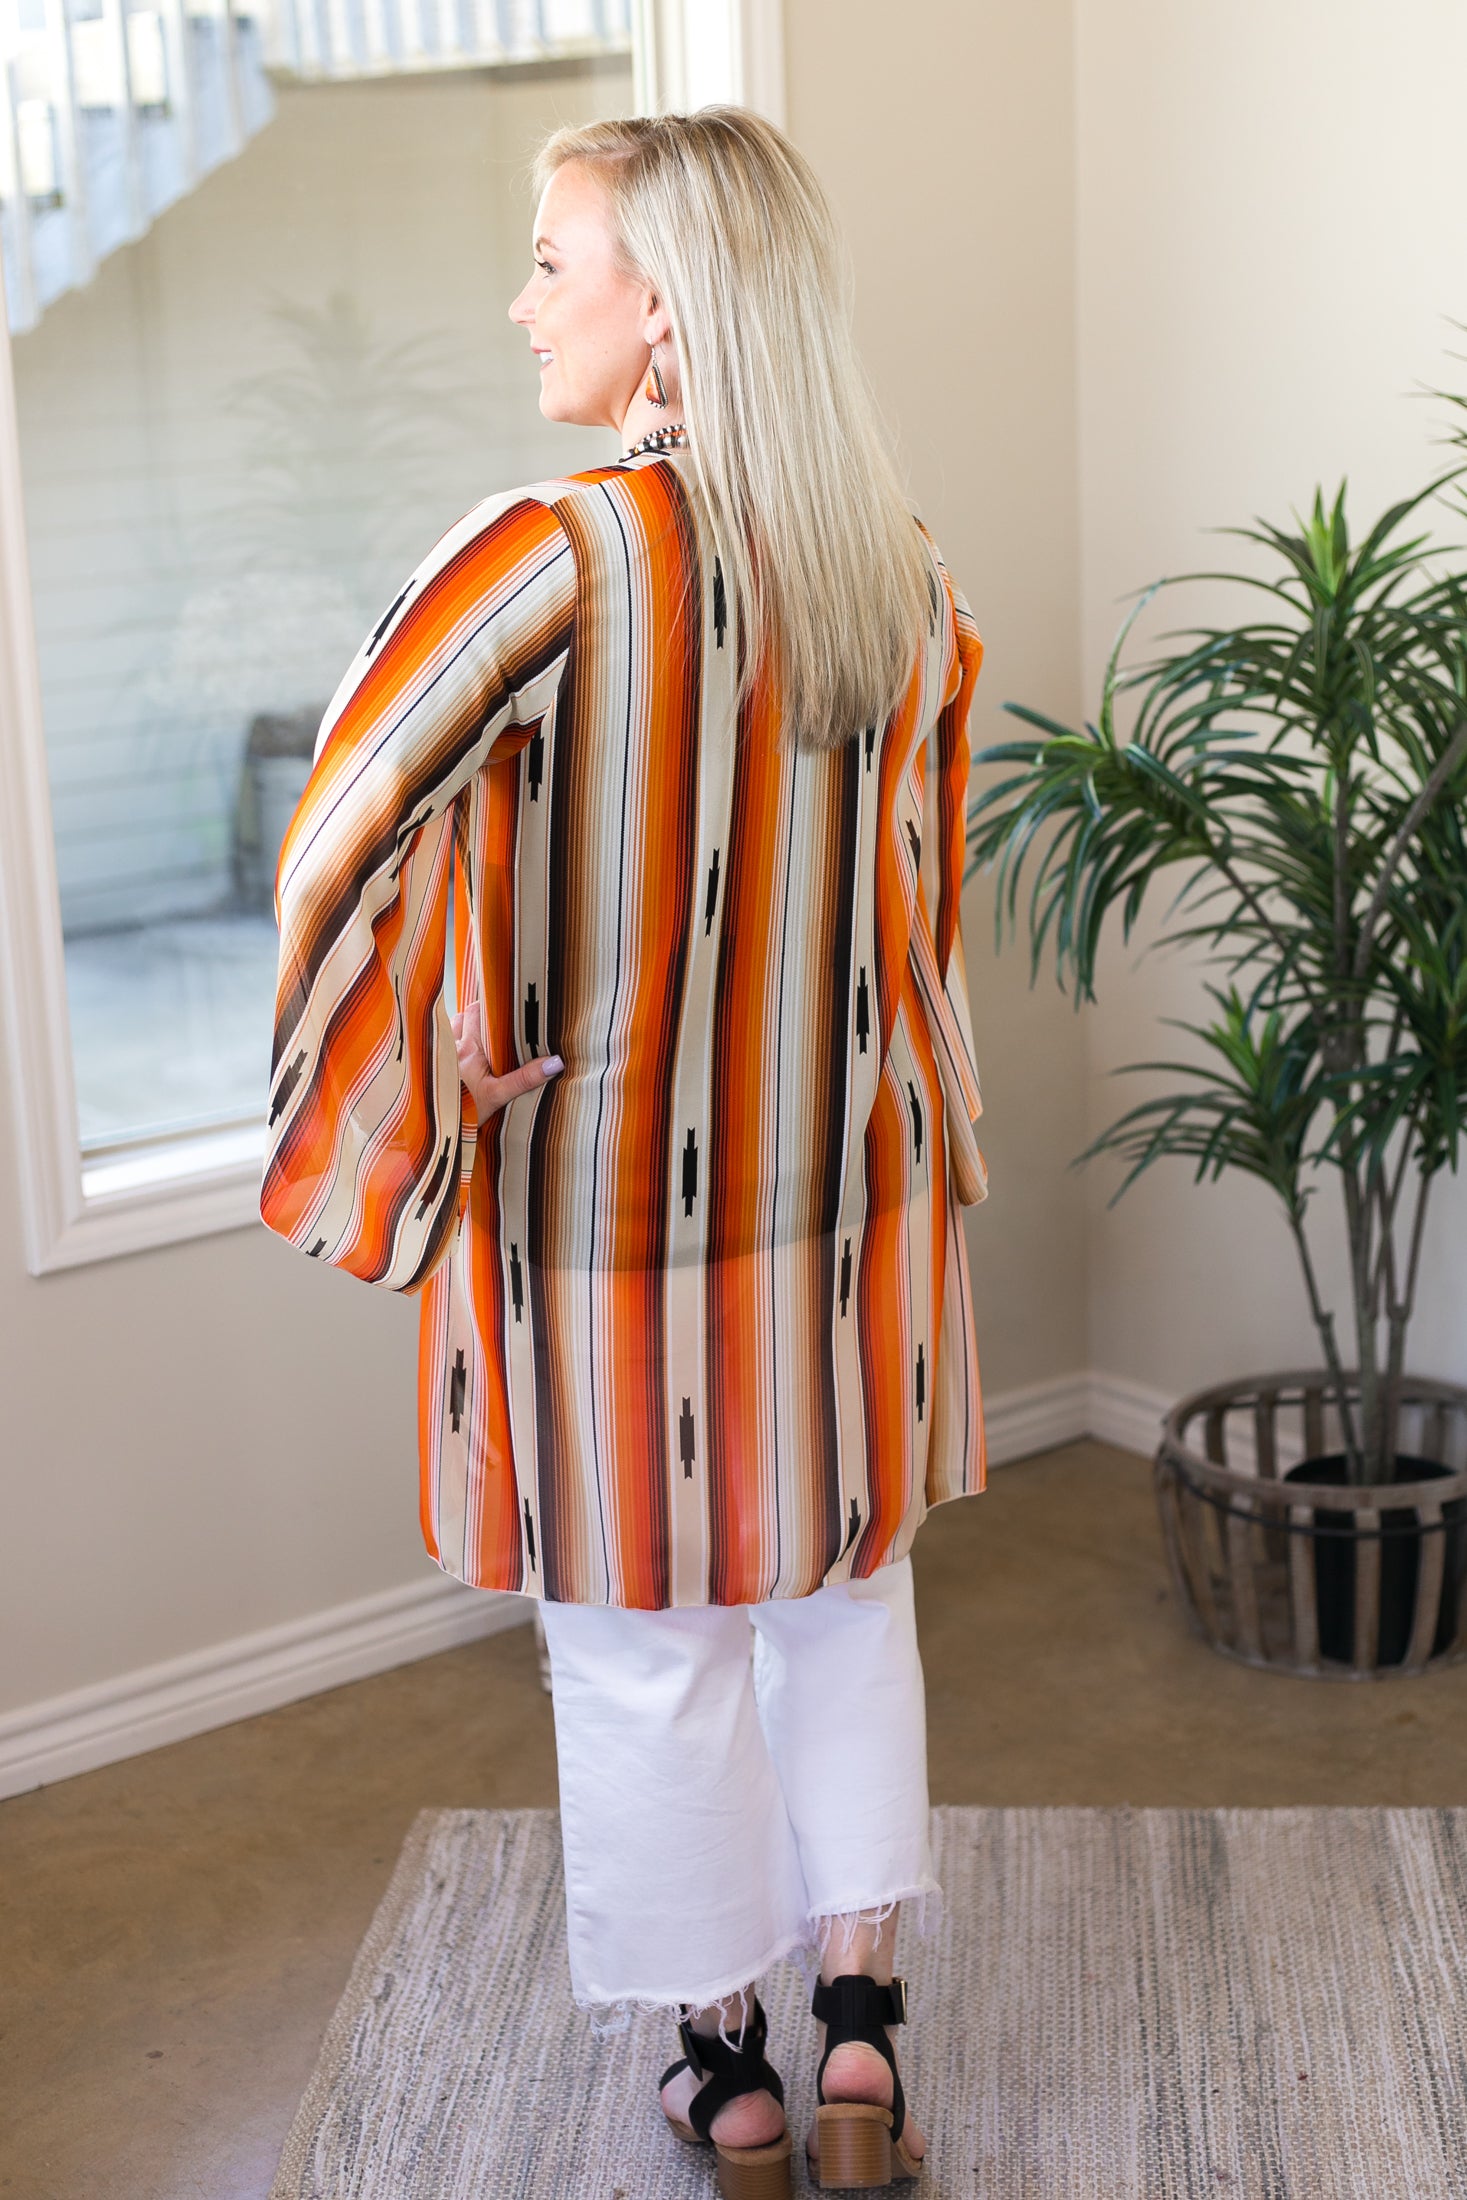 Southwestern Sunrise Serape Print Sheer Kimono in Orange and Beige - Giddy Up Glamour Boutique